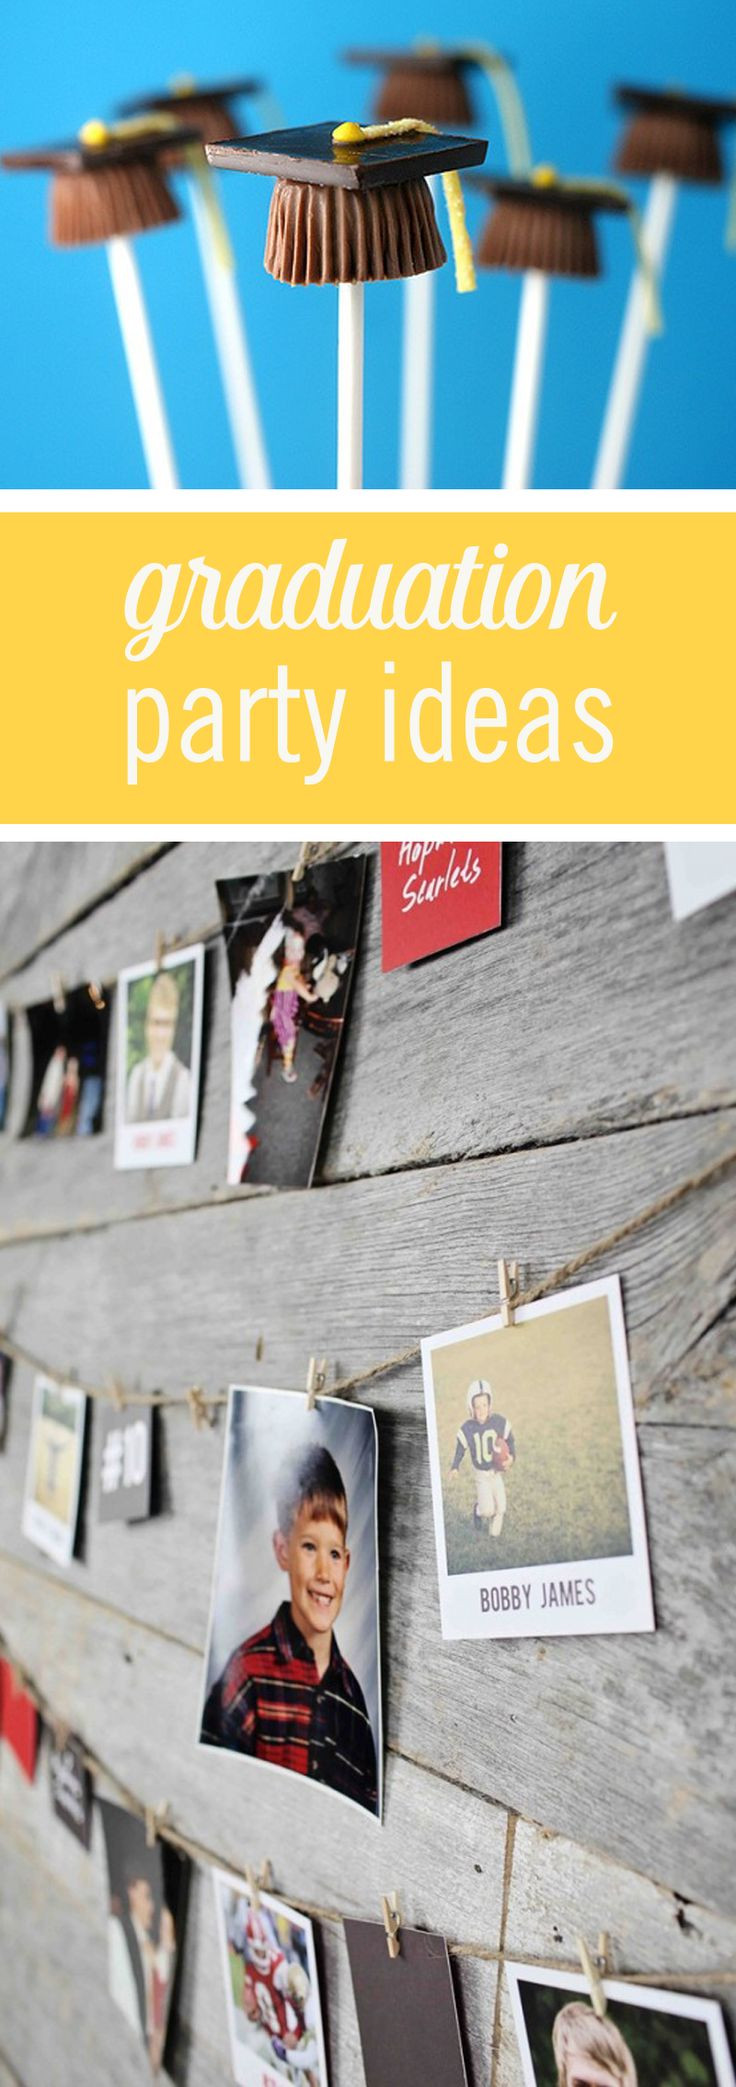 Graduation Party Ideas On A Budget
 17 Best images about Graduation party idea on Pinterest